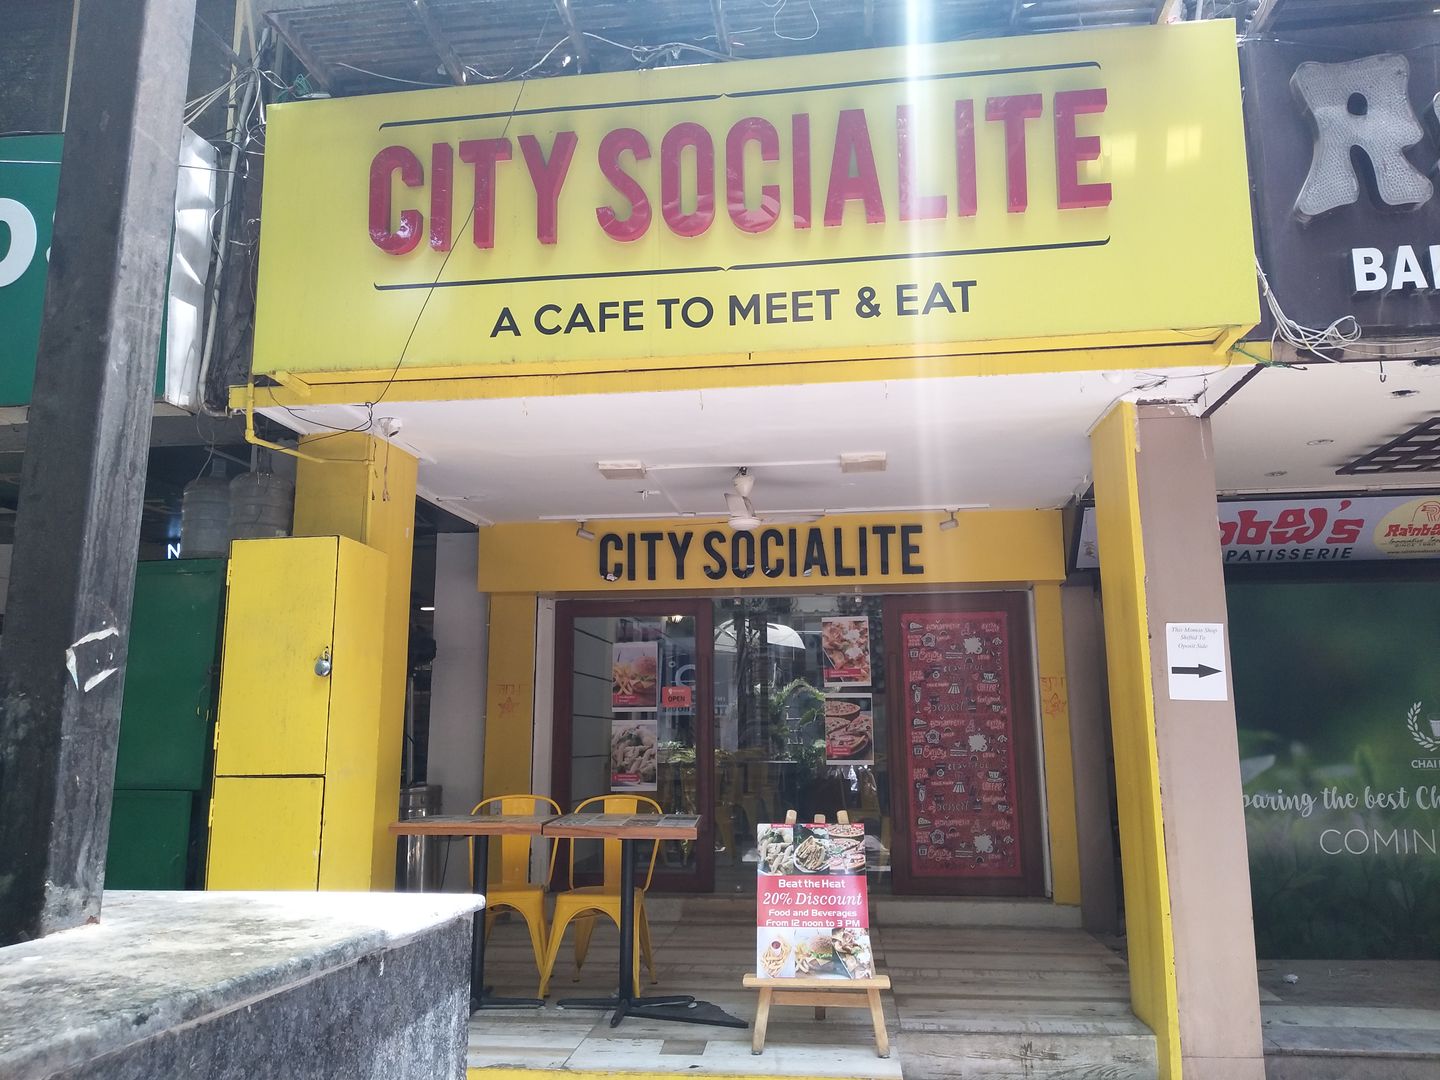 French Chic Cafe Design - City Socialite, Ecoinch Services Private Limited Ecoinch Services Private Limited Portas Portas